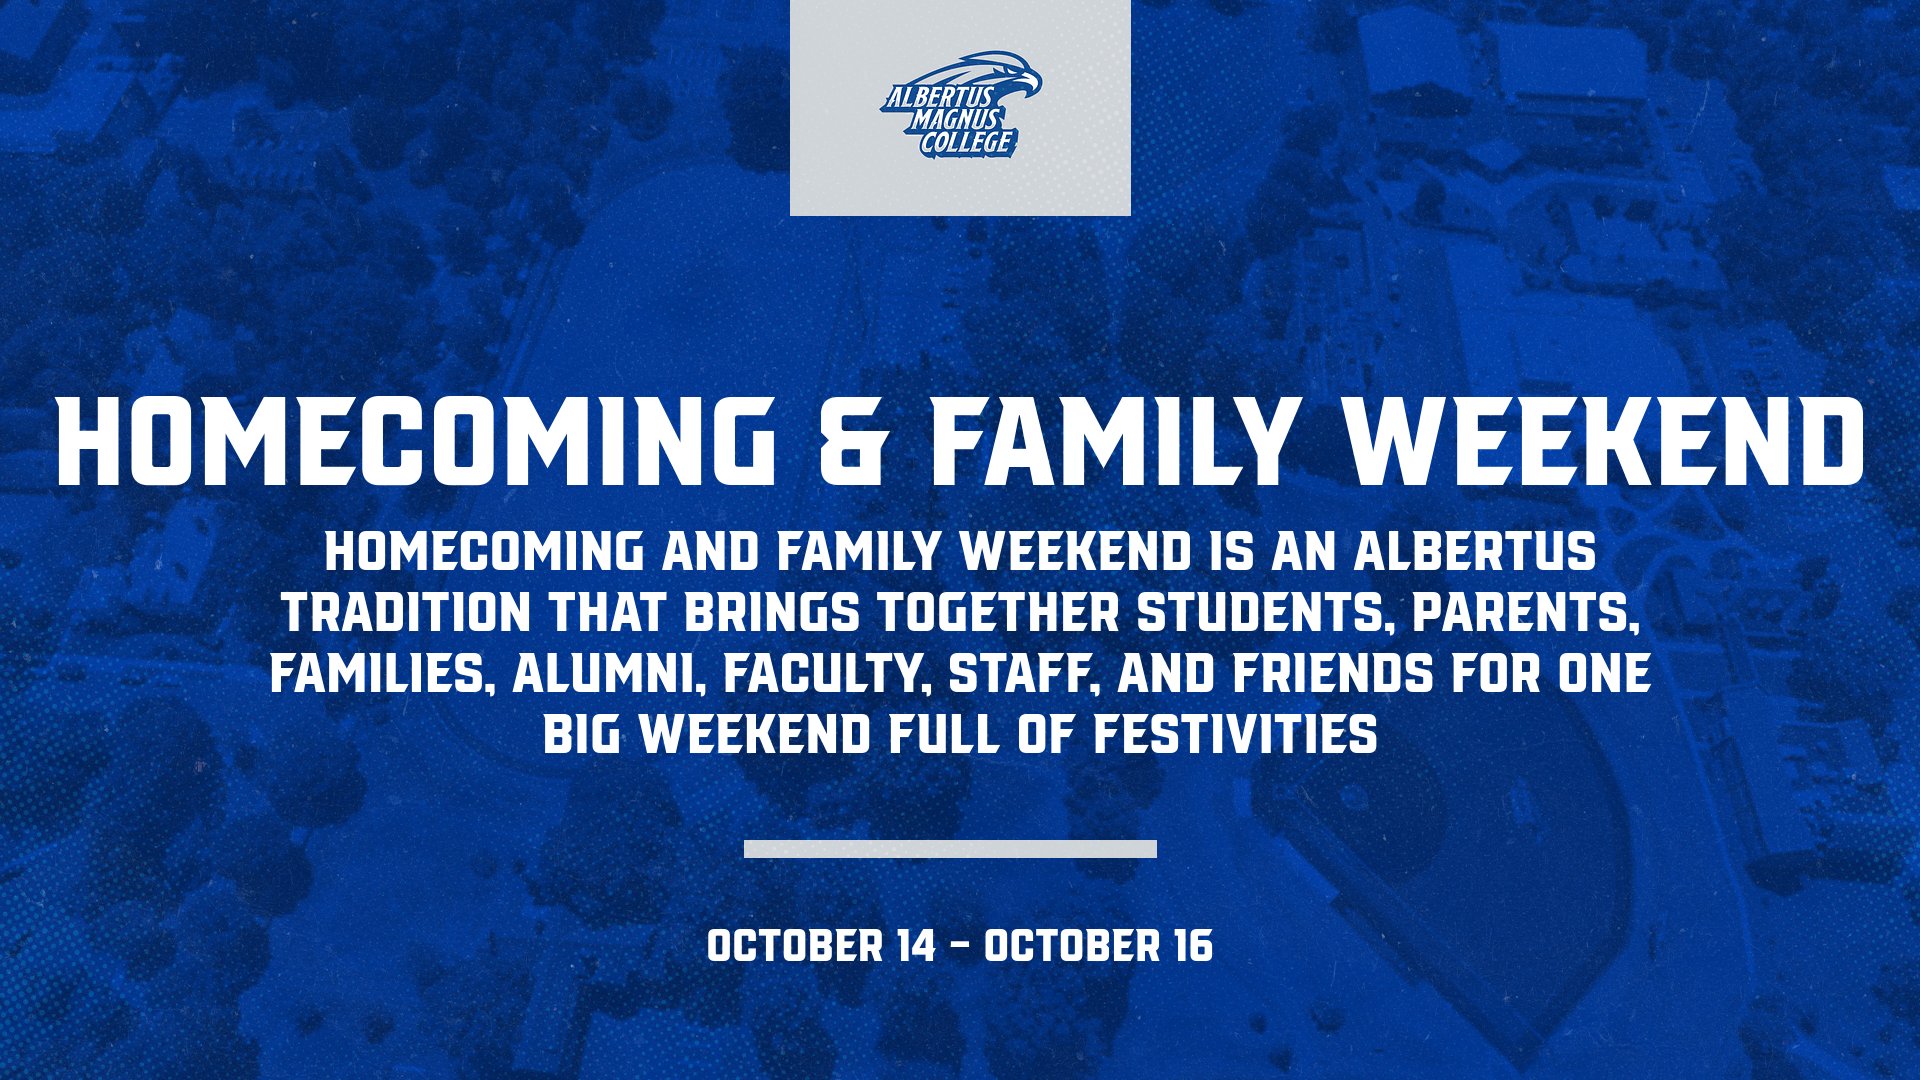 Albertus Magnus College Homecoming Weekend Set for Oct. 14 - Oct. 16